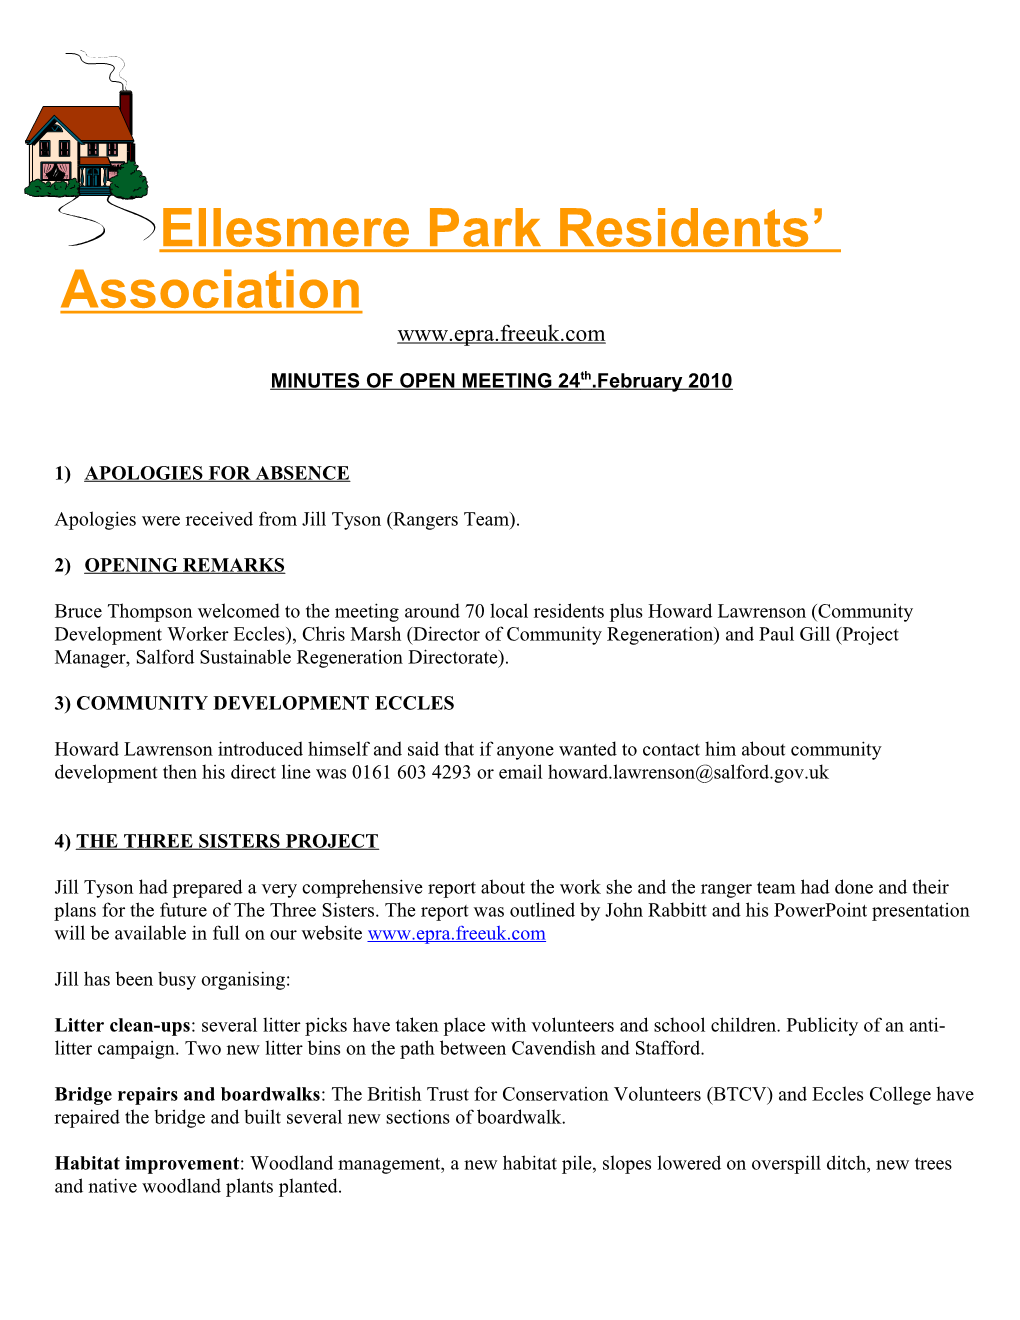 Ellesmere Park Residents Association